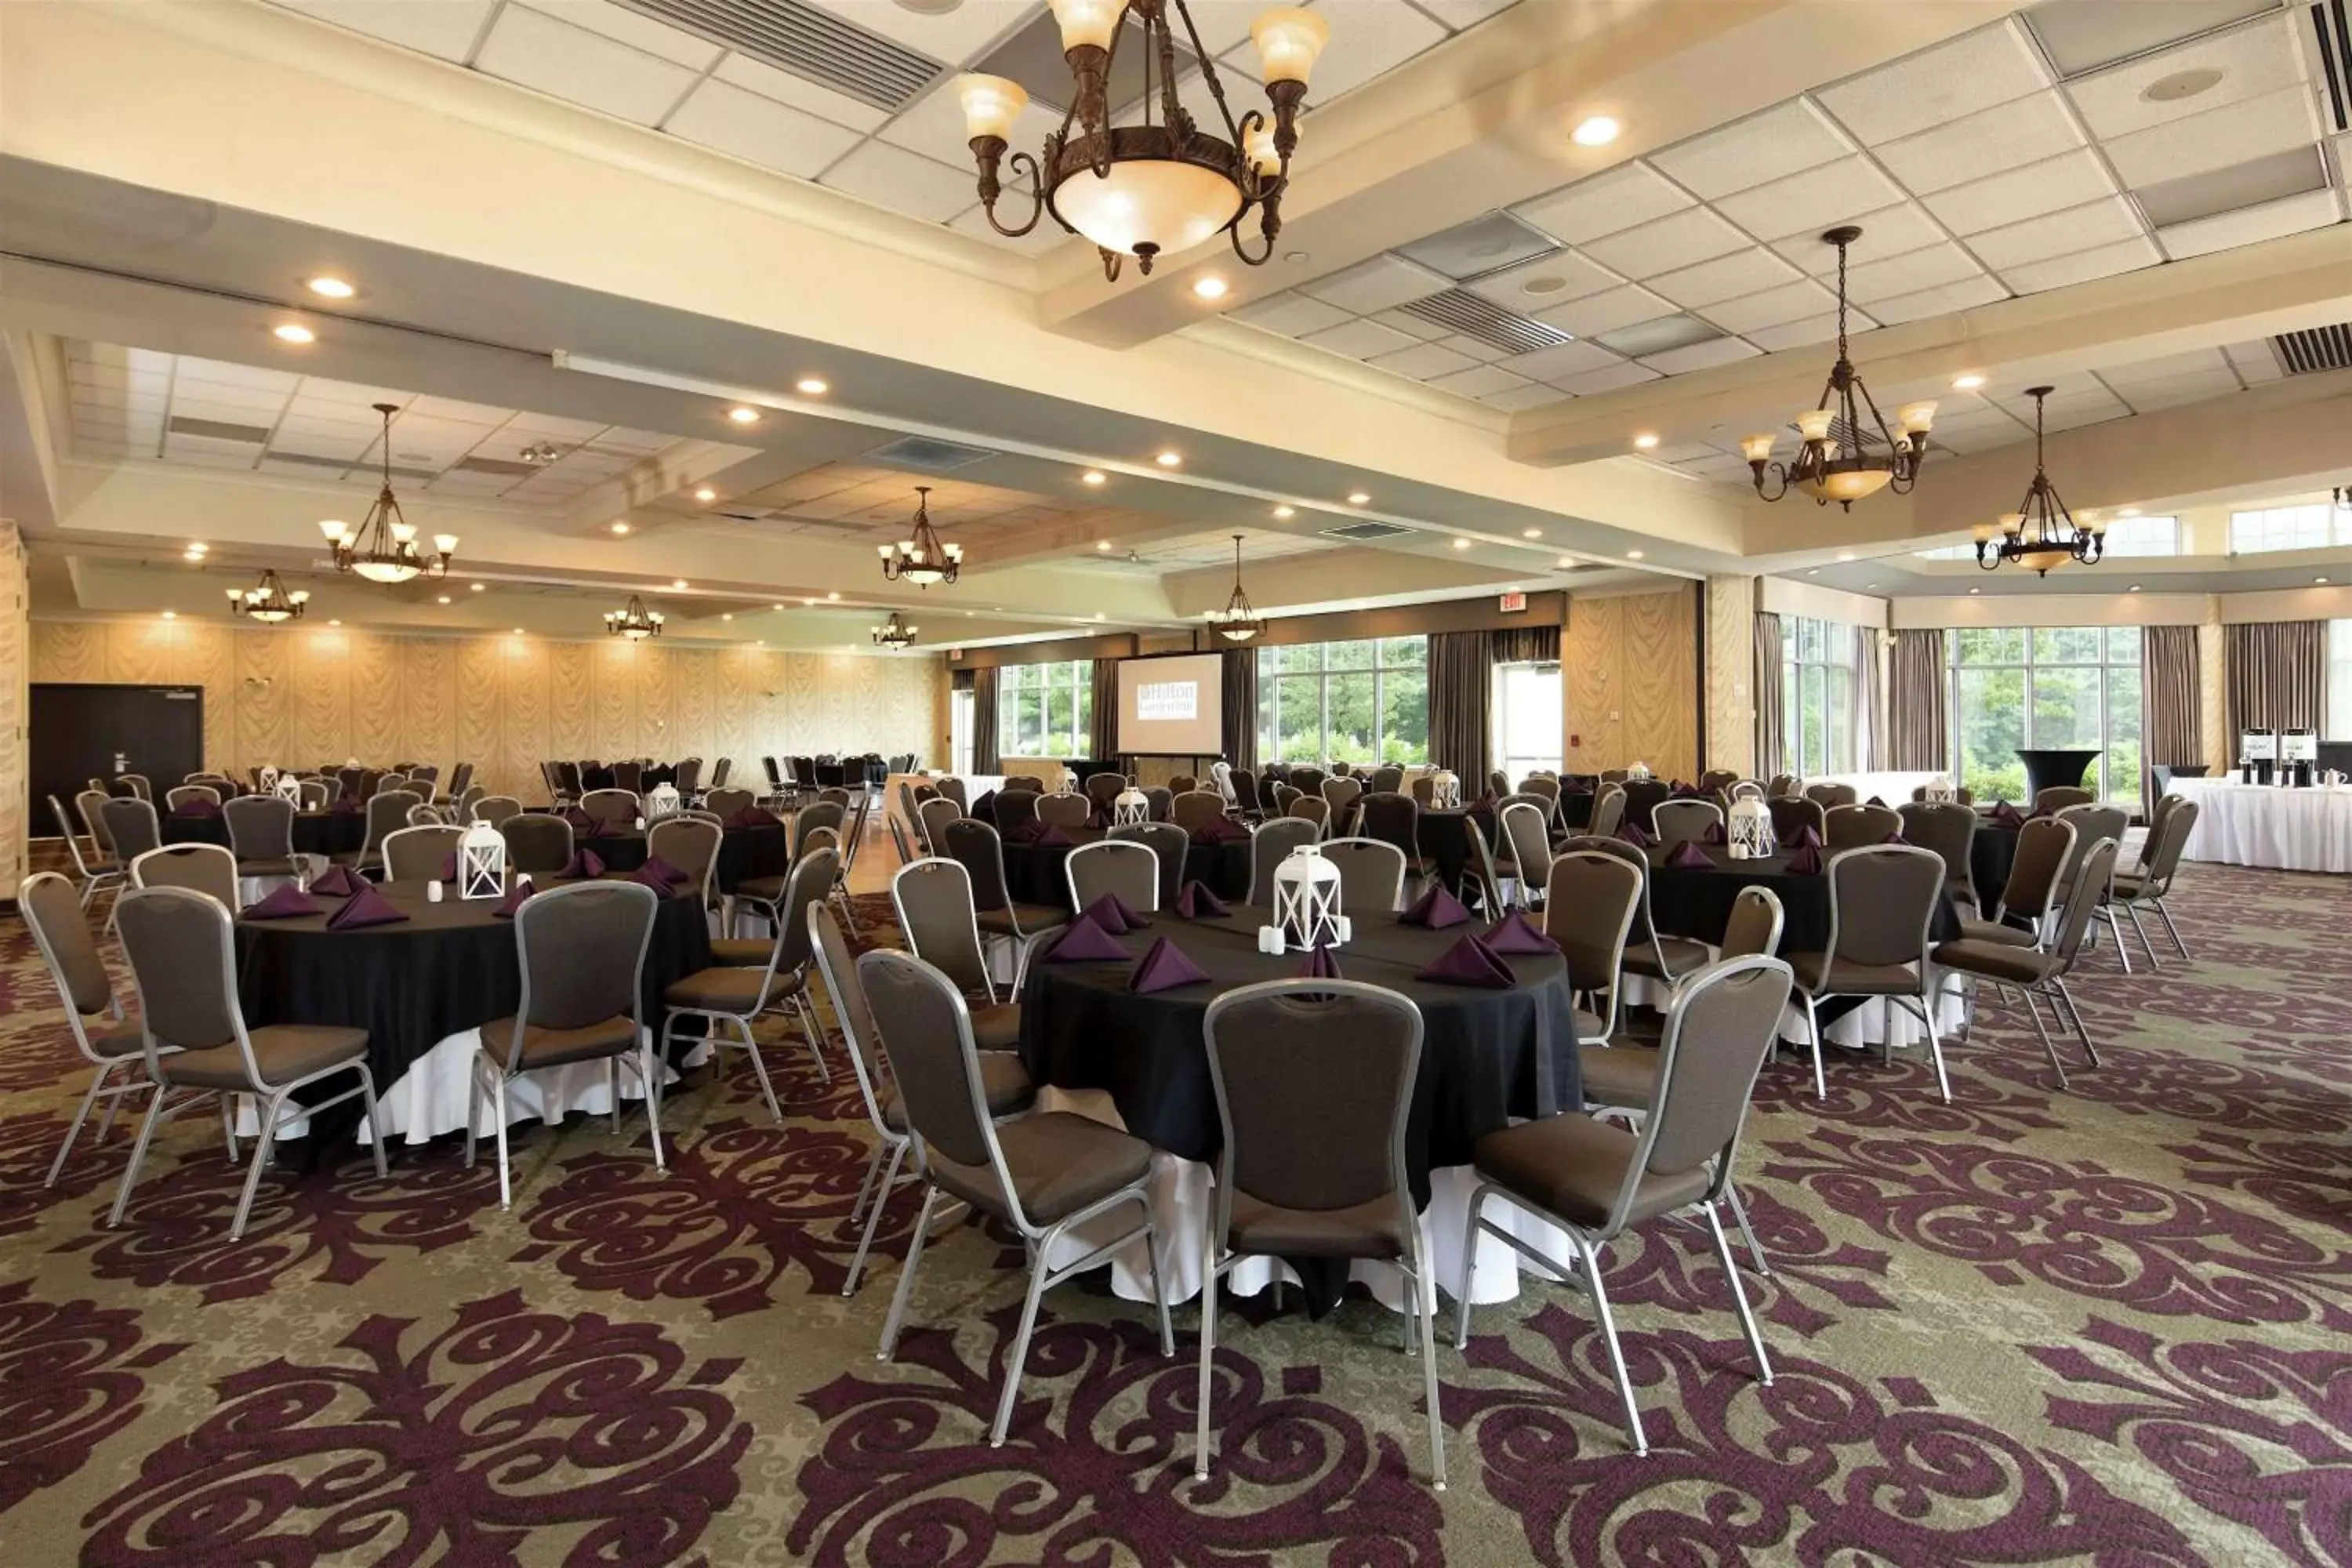 Meeting/conference room, Banquet Facilities in Hilton Garden Inn Auburn Riverwatch